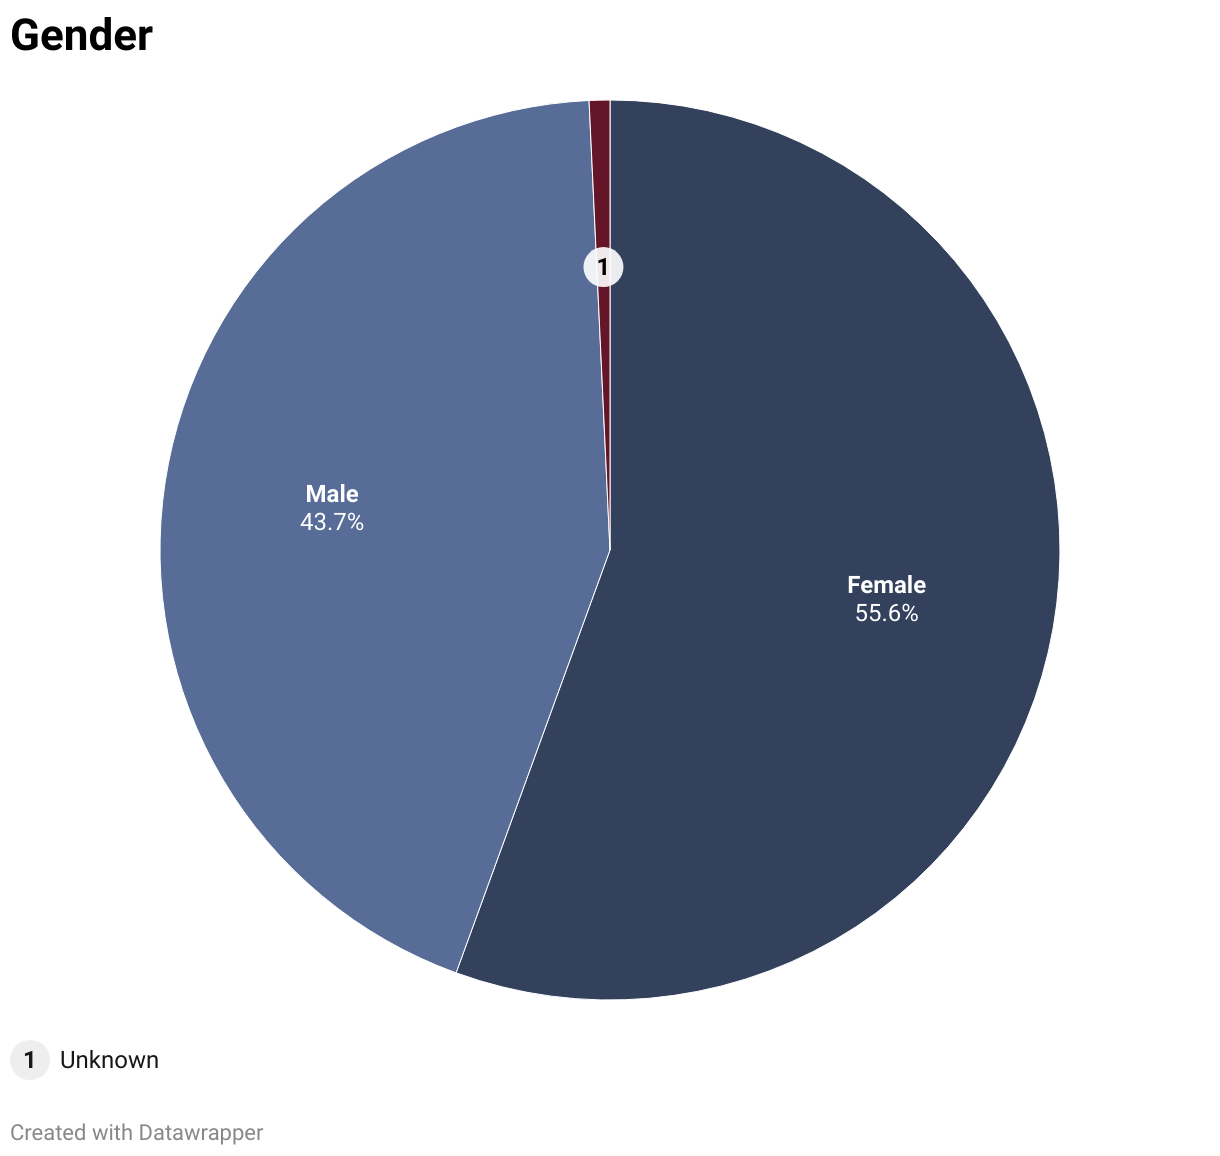 43.7% male, 55.5% female, 0.74% unknown